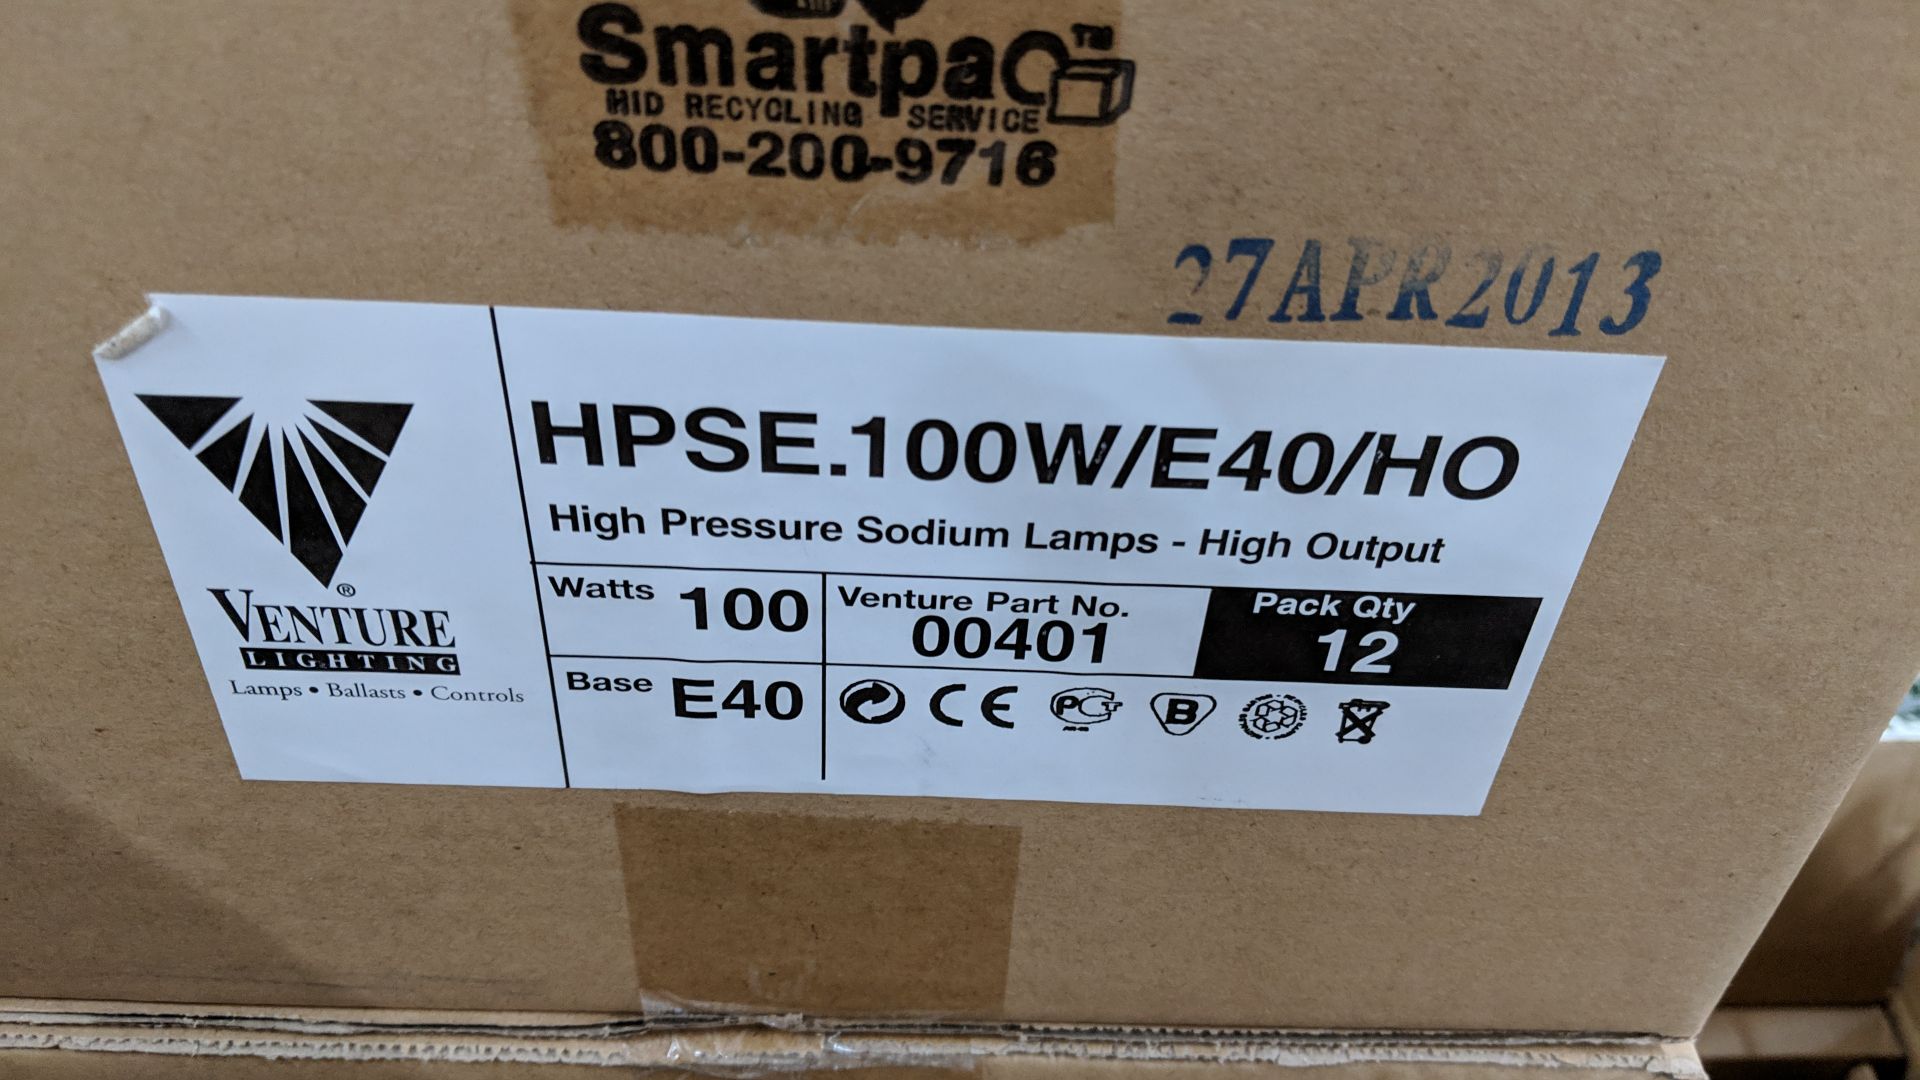 48 off Venture Lighting HPSE.100W/E40/H0 high pressure 100W E40 sodium high output lamps (bulbs) - Image 2 of 2